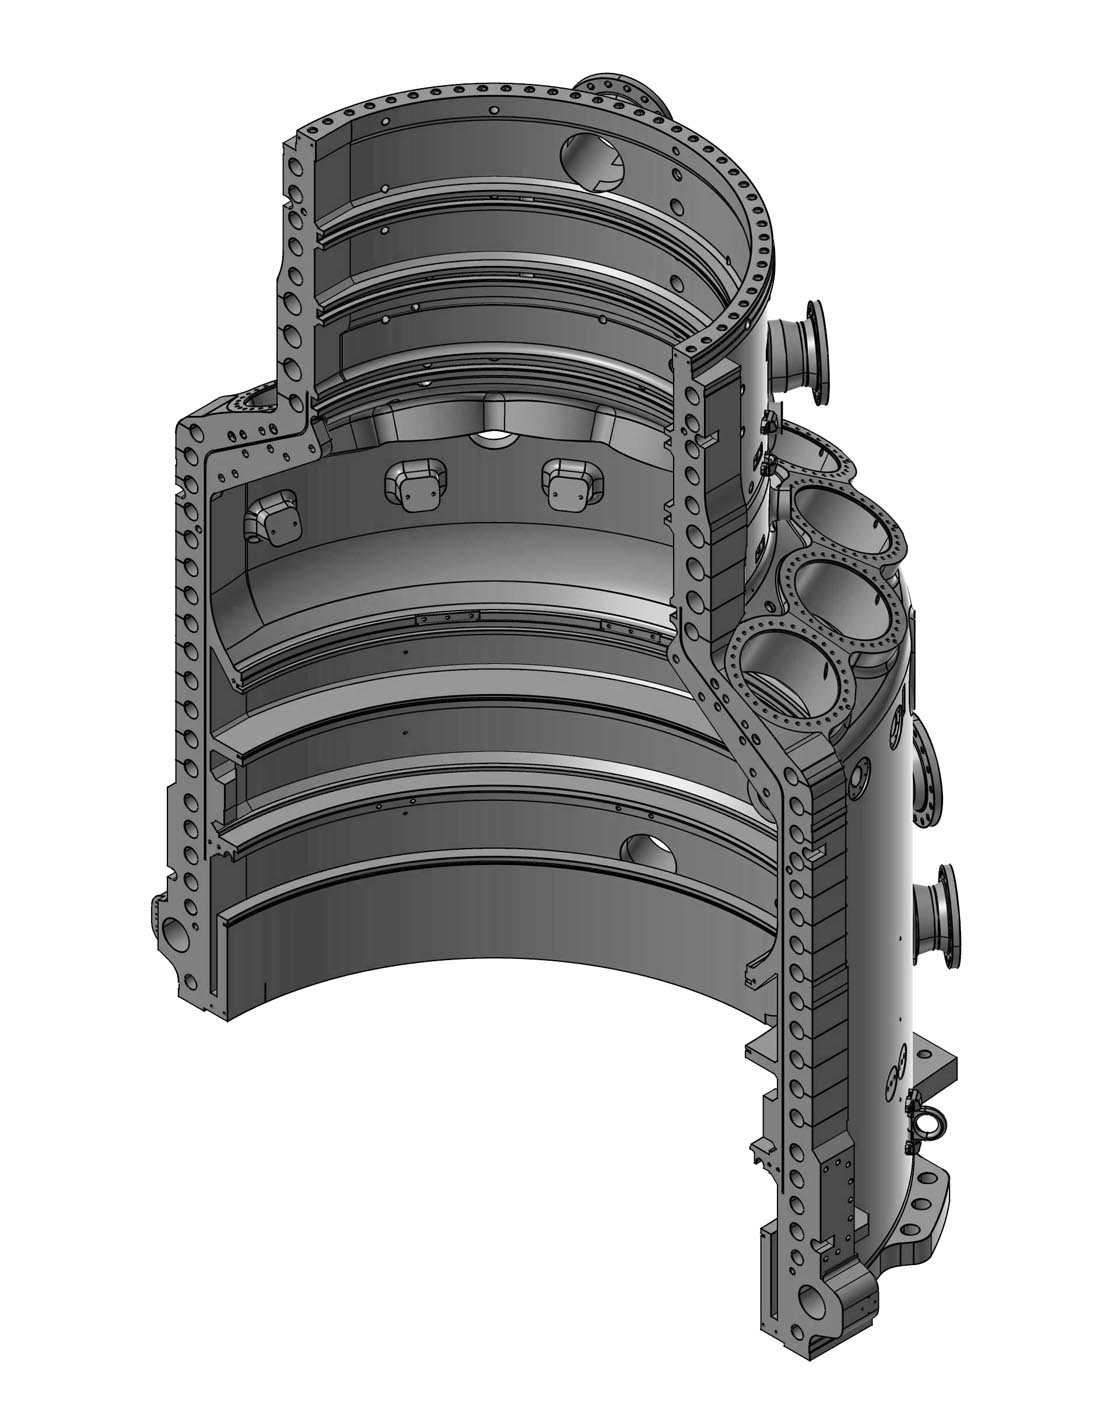 Officine Dall'Alba S.r.l. - Turbine Casing layout